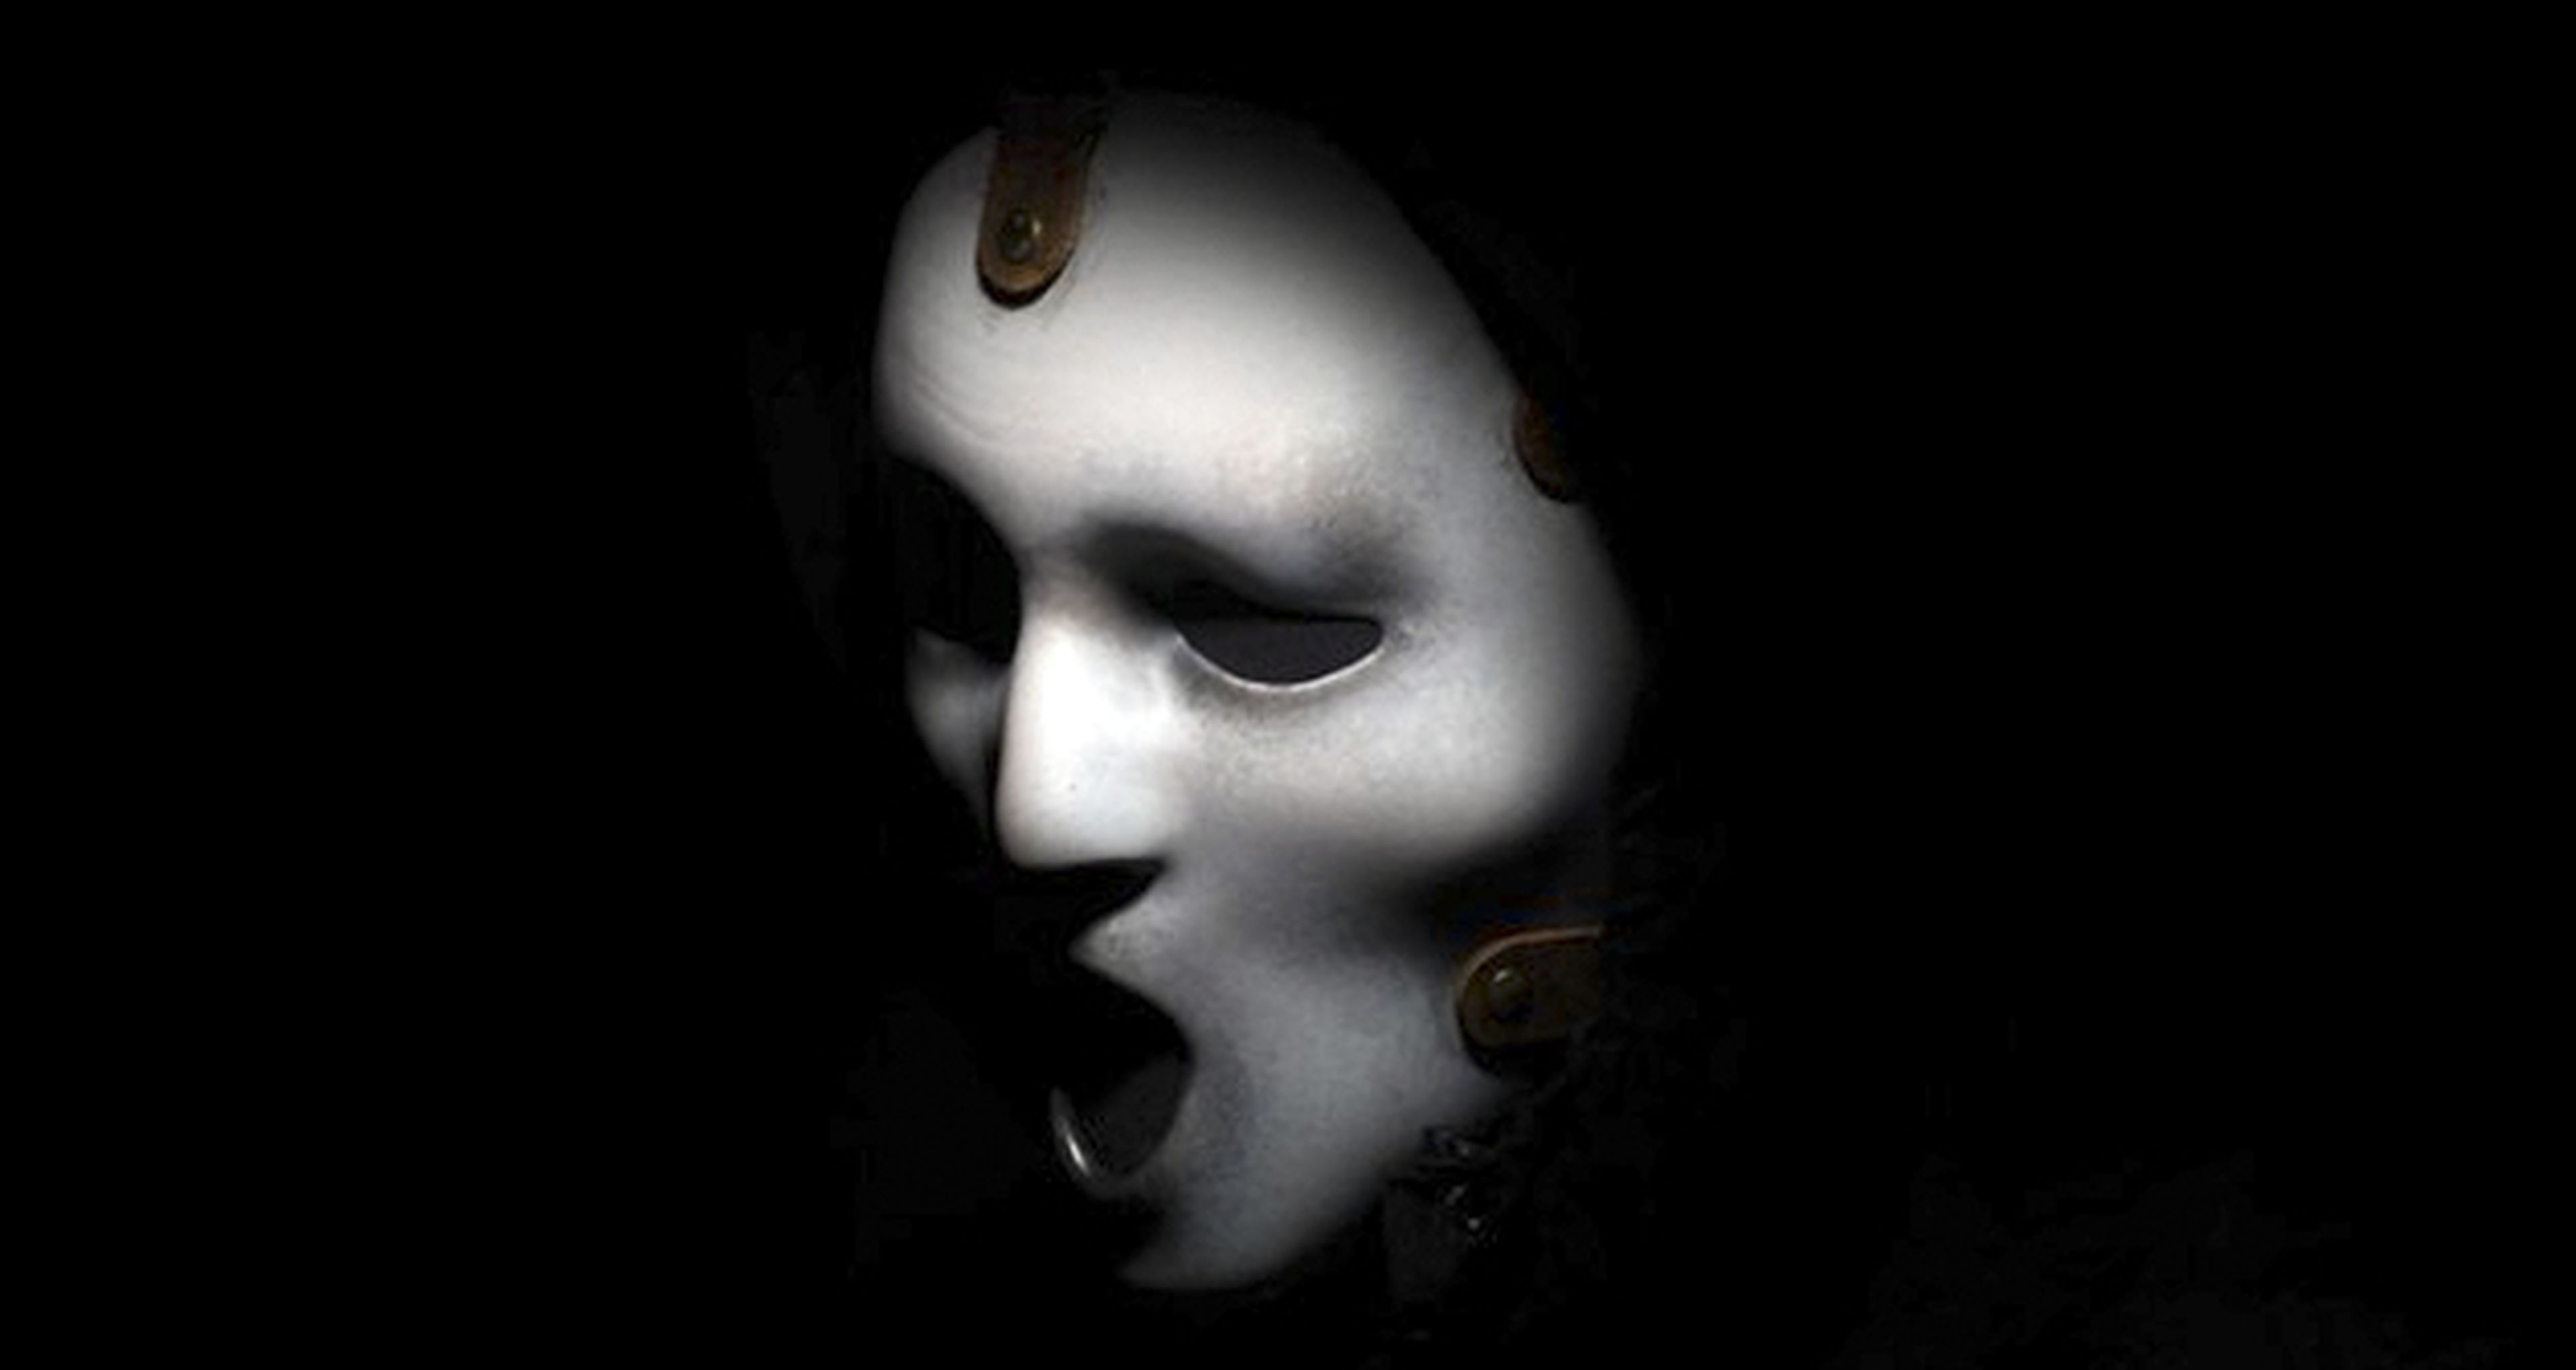 Scream, la serie, presenta la máscara de Ghostface